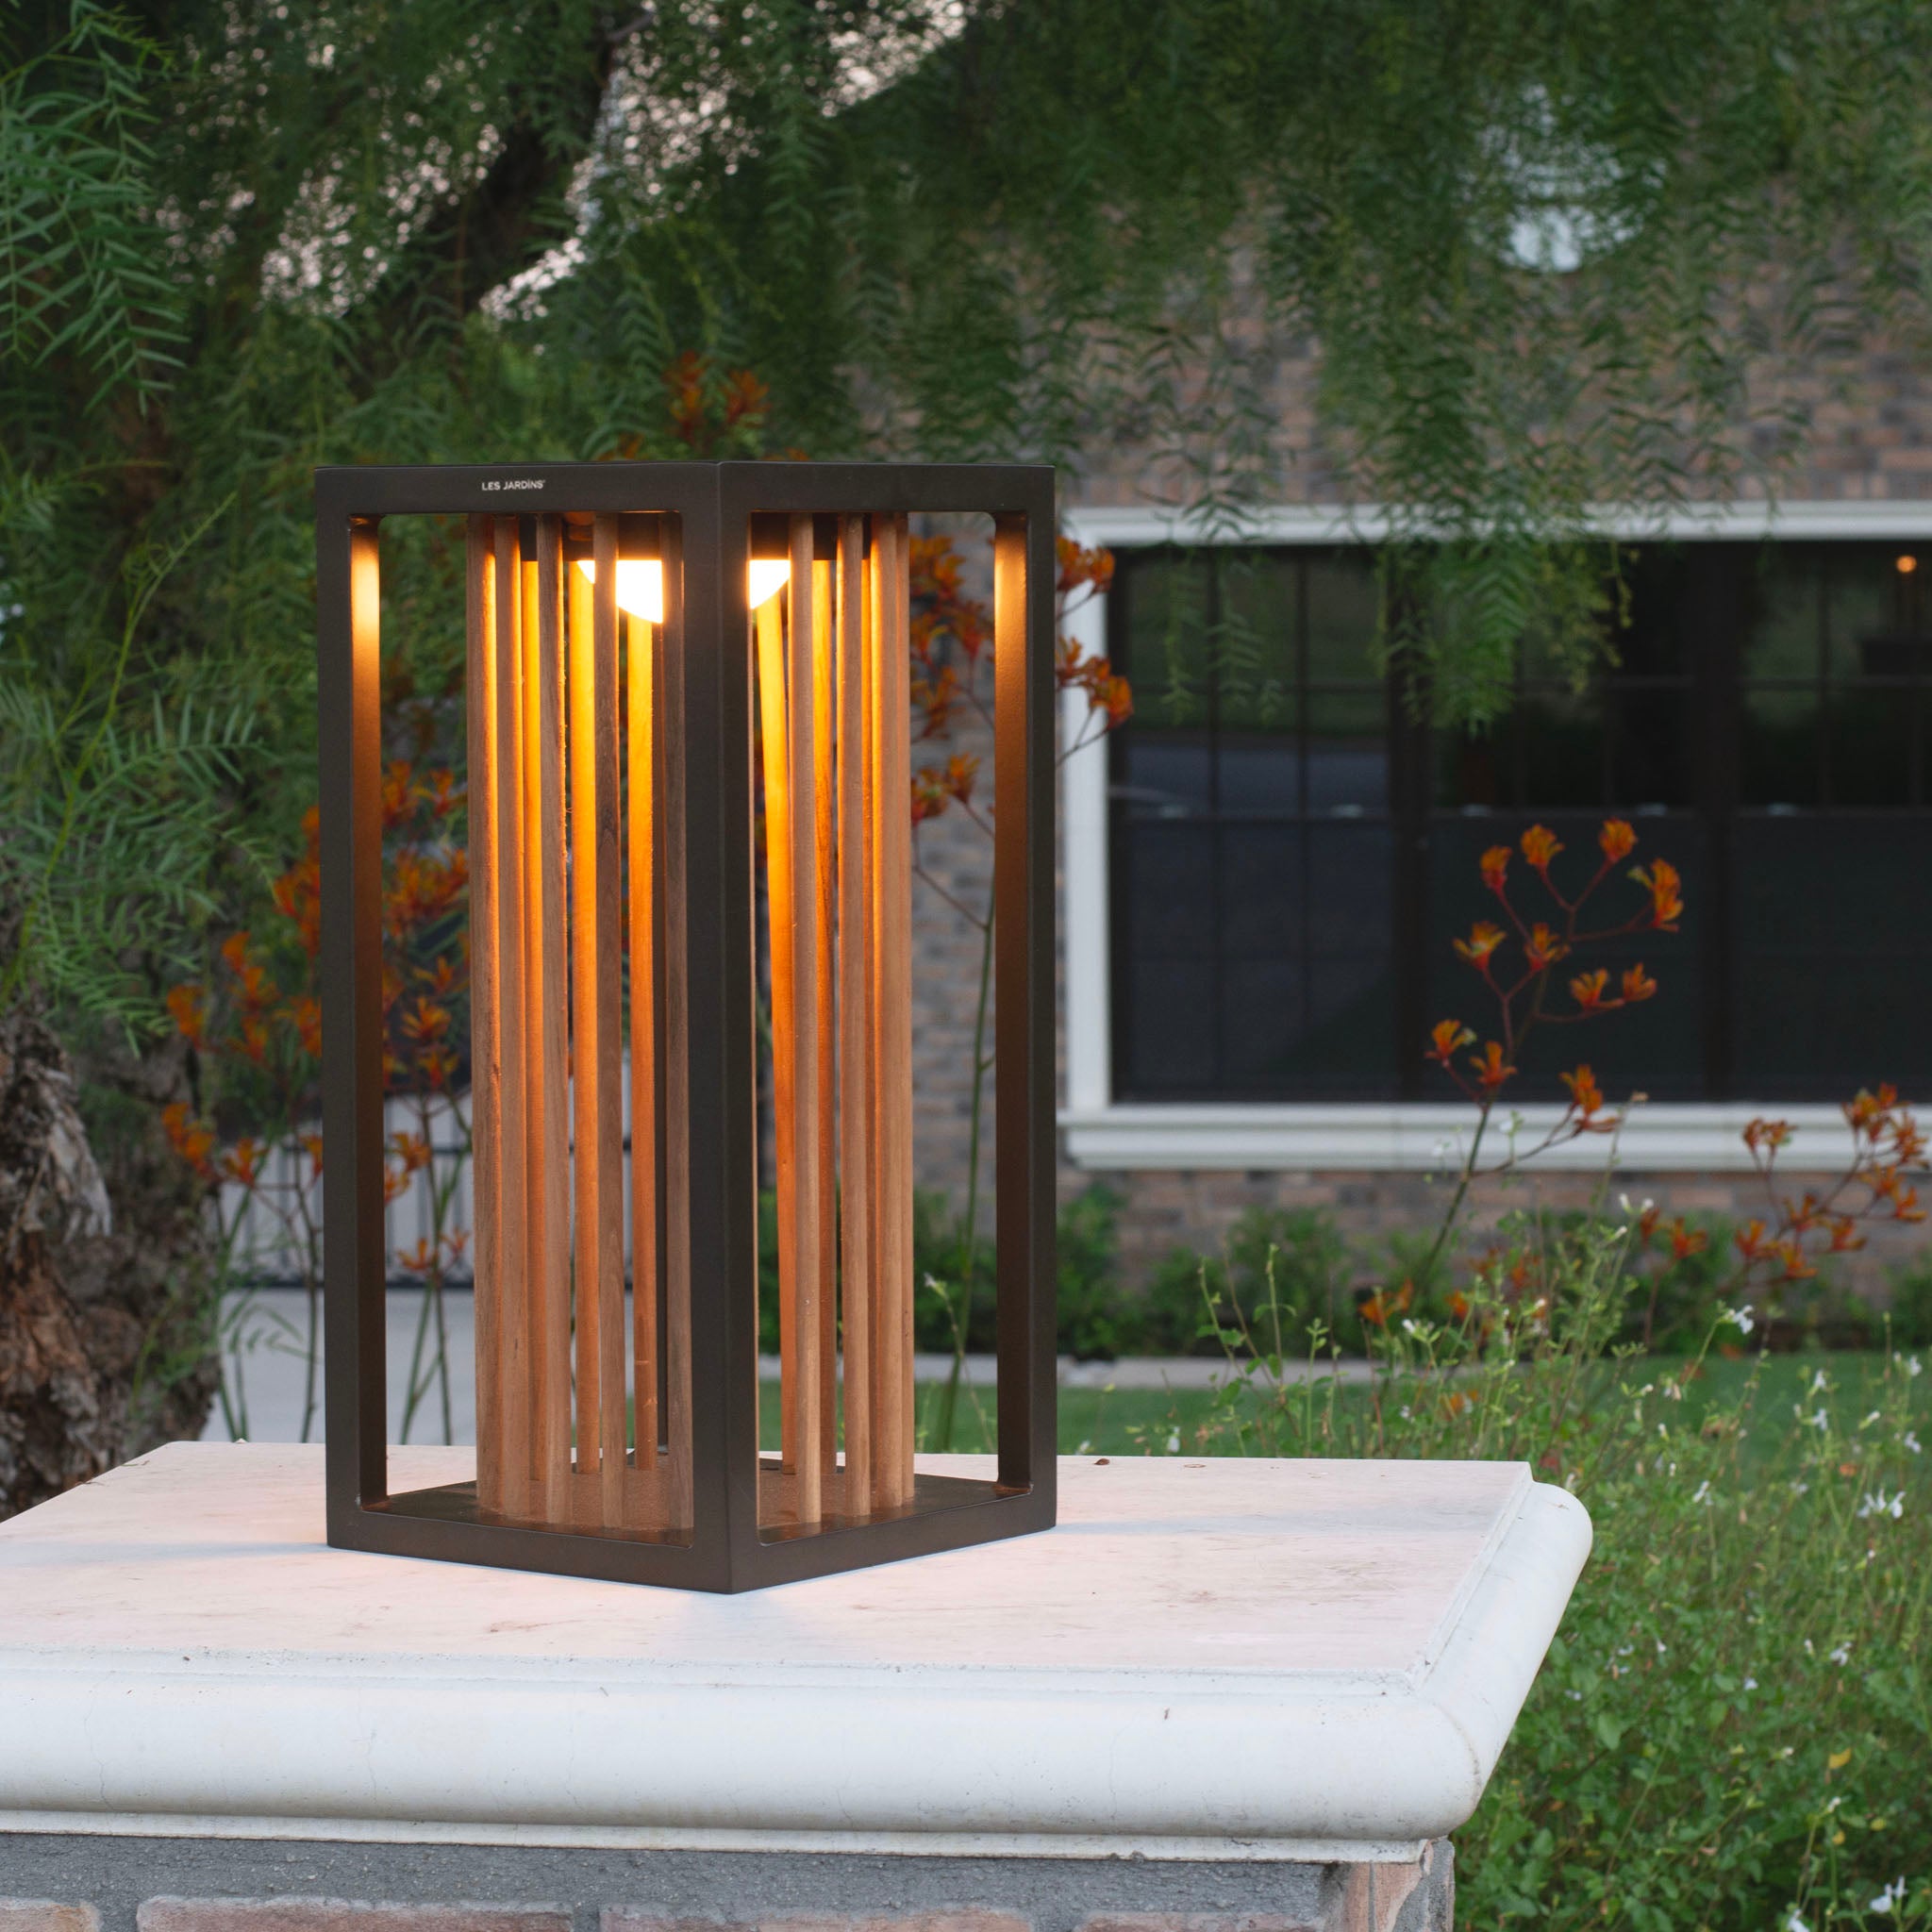 Inka solar lantern with ykary bulb lighting up outdoor garden